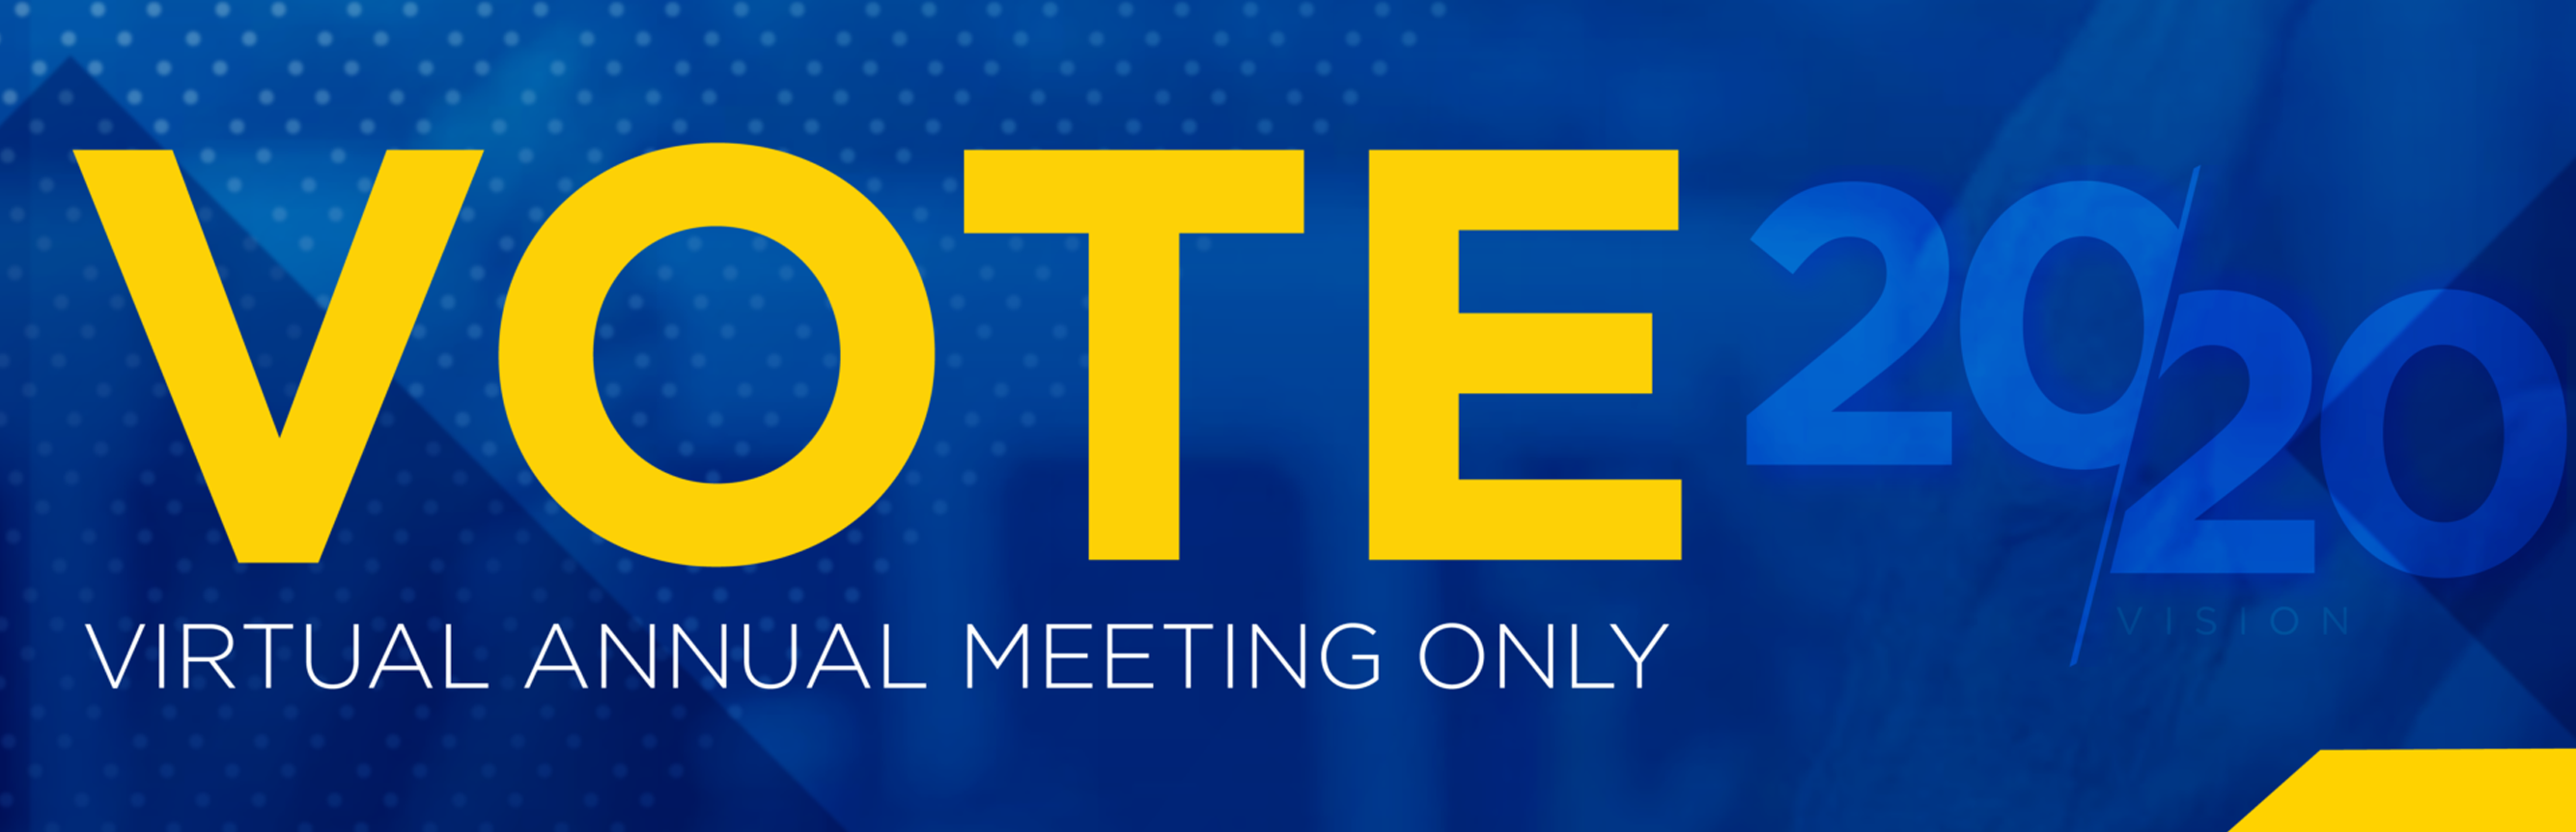 Vote 2020 Virtual Annual Meeting